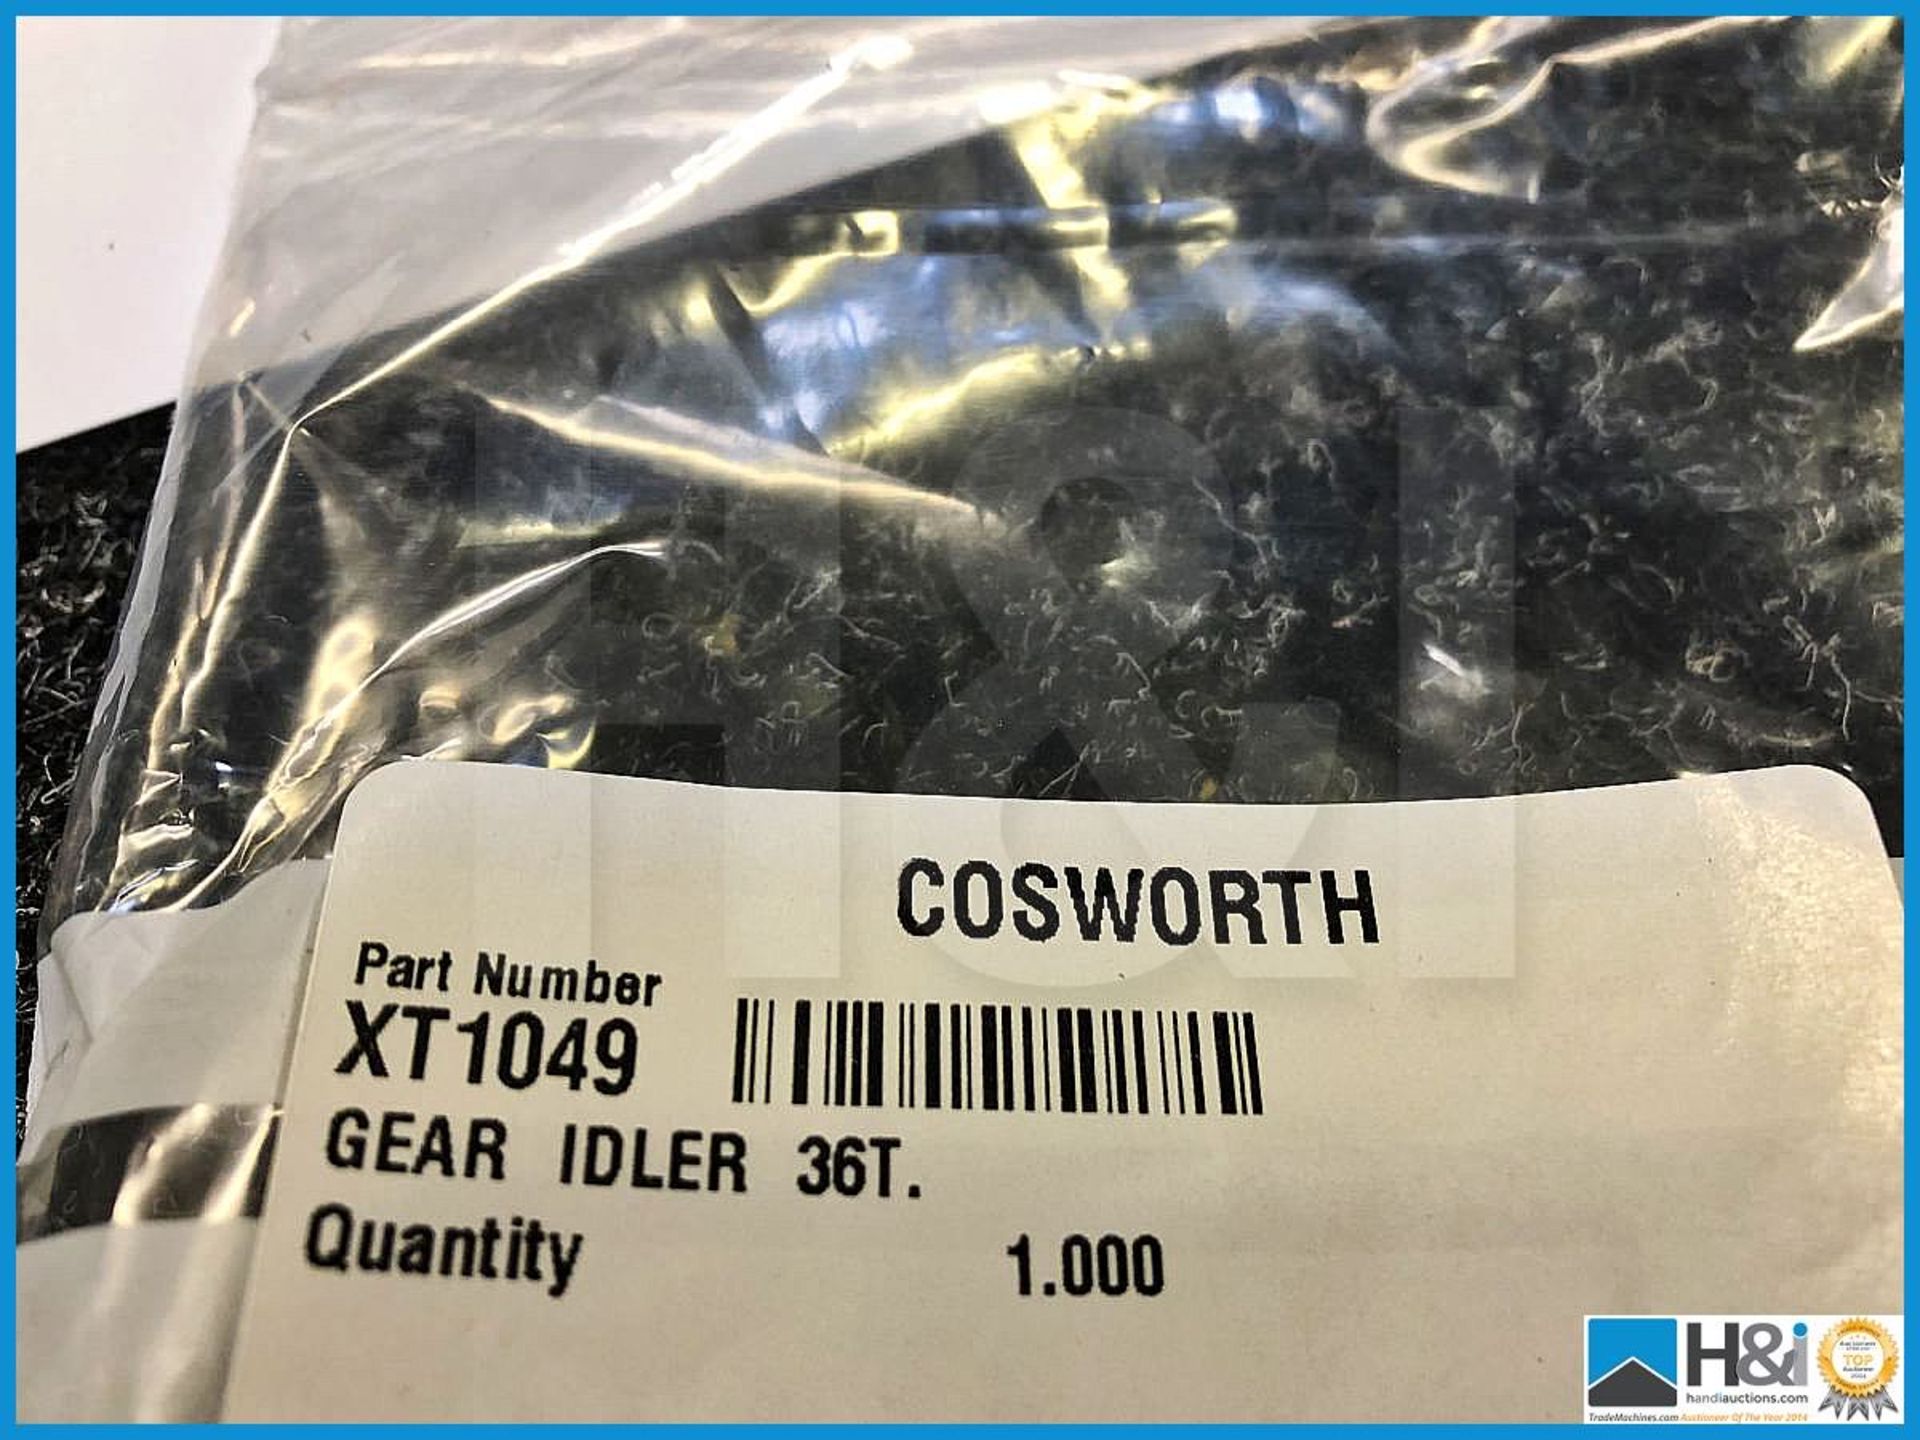 7 x Cosworth XT IndyCar Gear Idler 36T. Code XT1049. Lot 222. RRP GBP2120 - Image 3 of 3